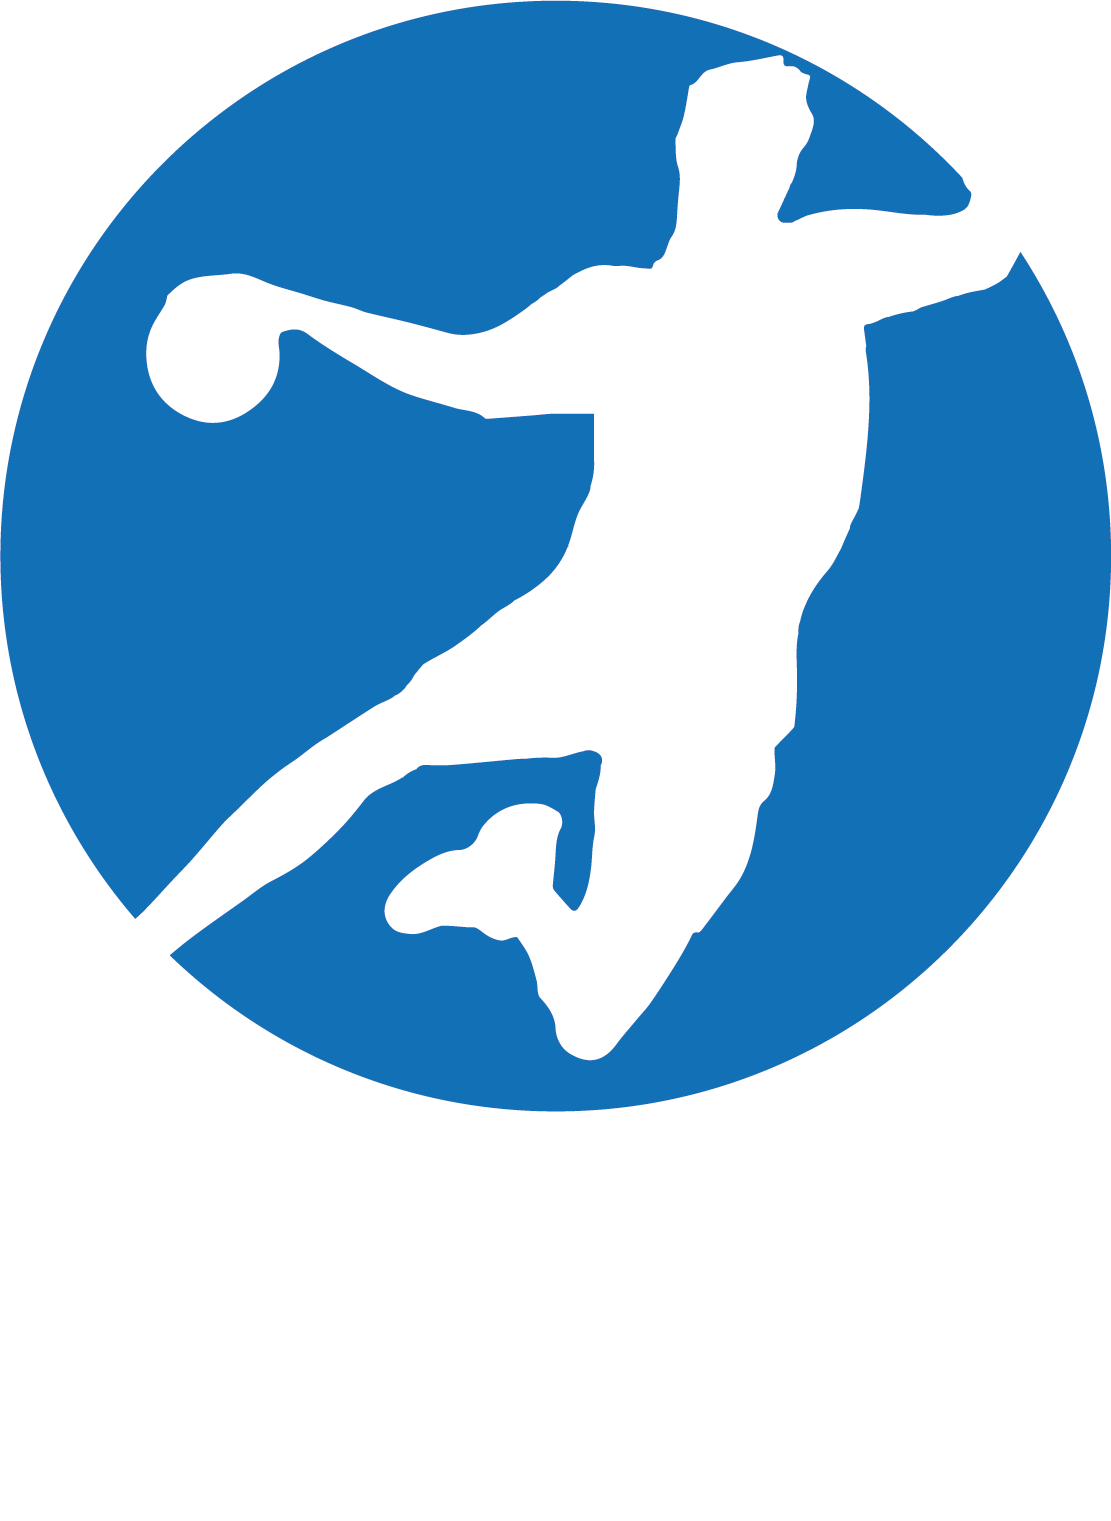 Stiftung Handball Jugendförderung Aargau